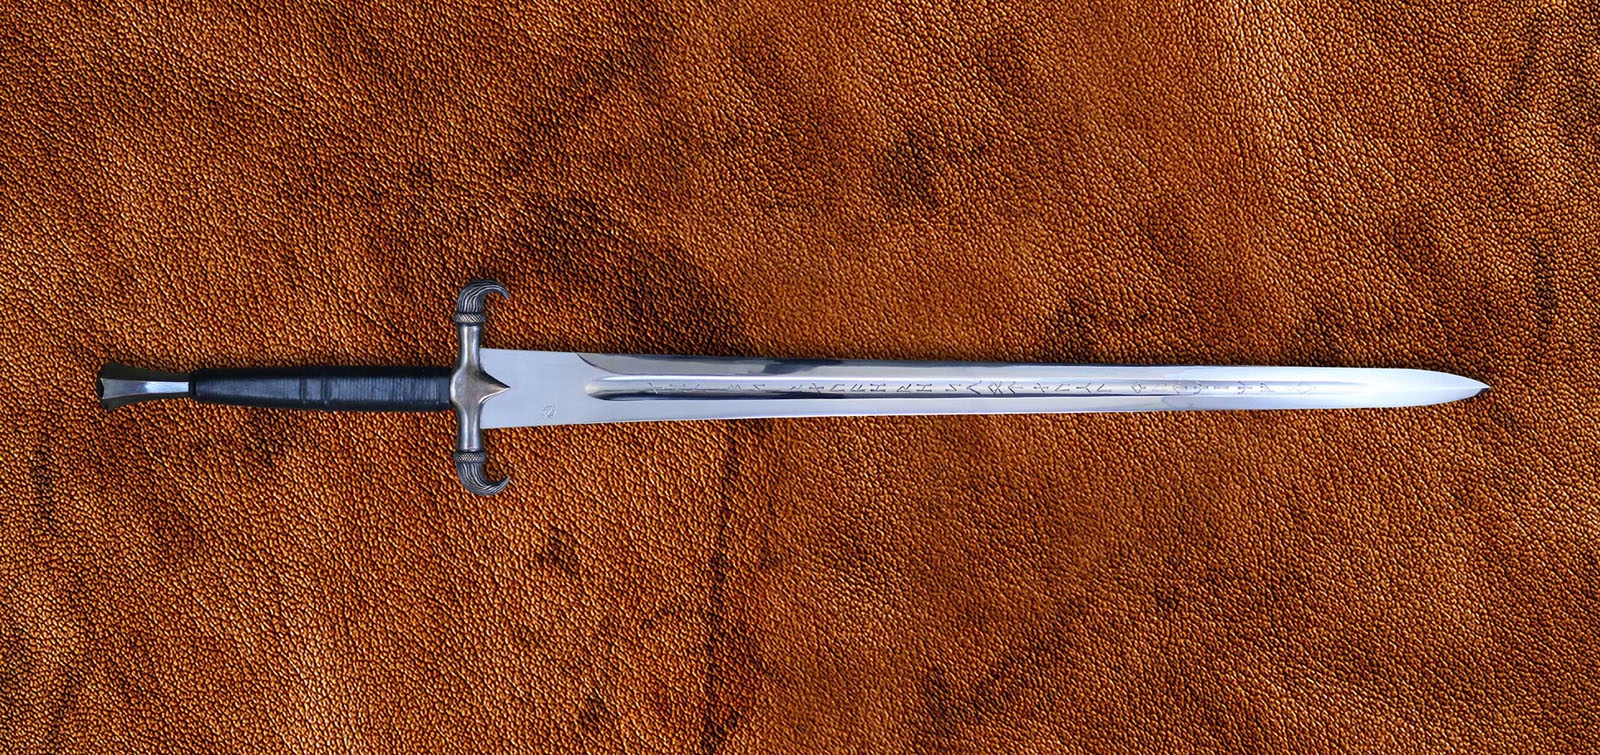 The Erland Sword